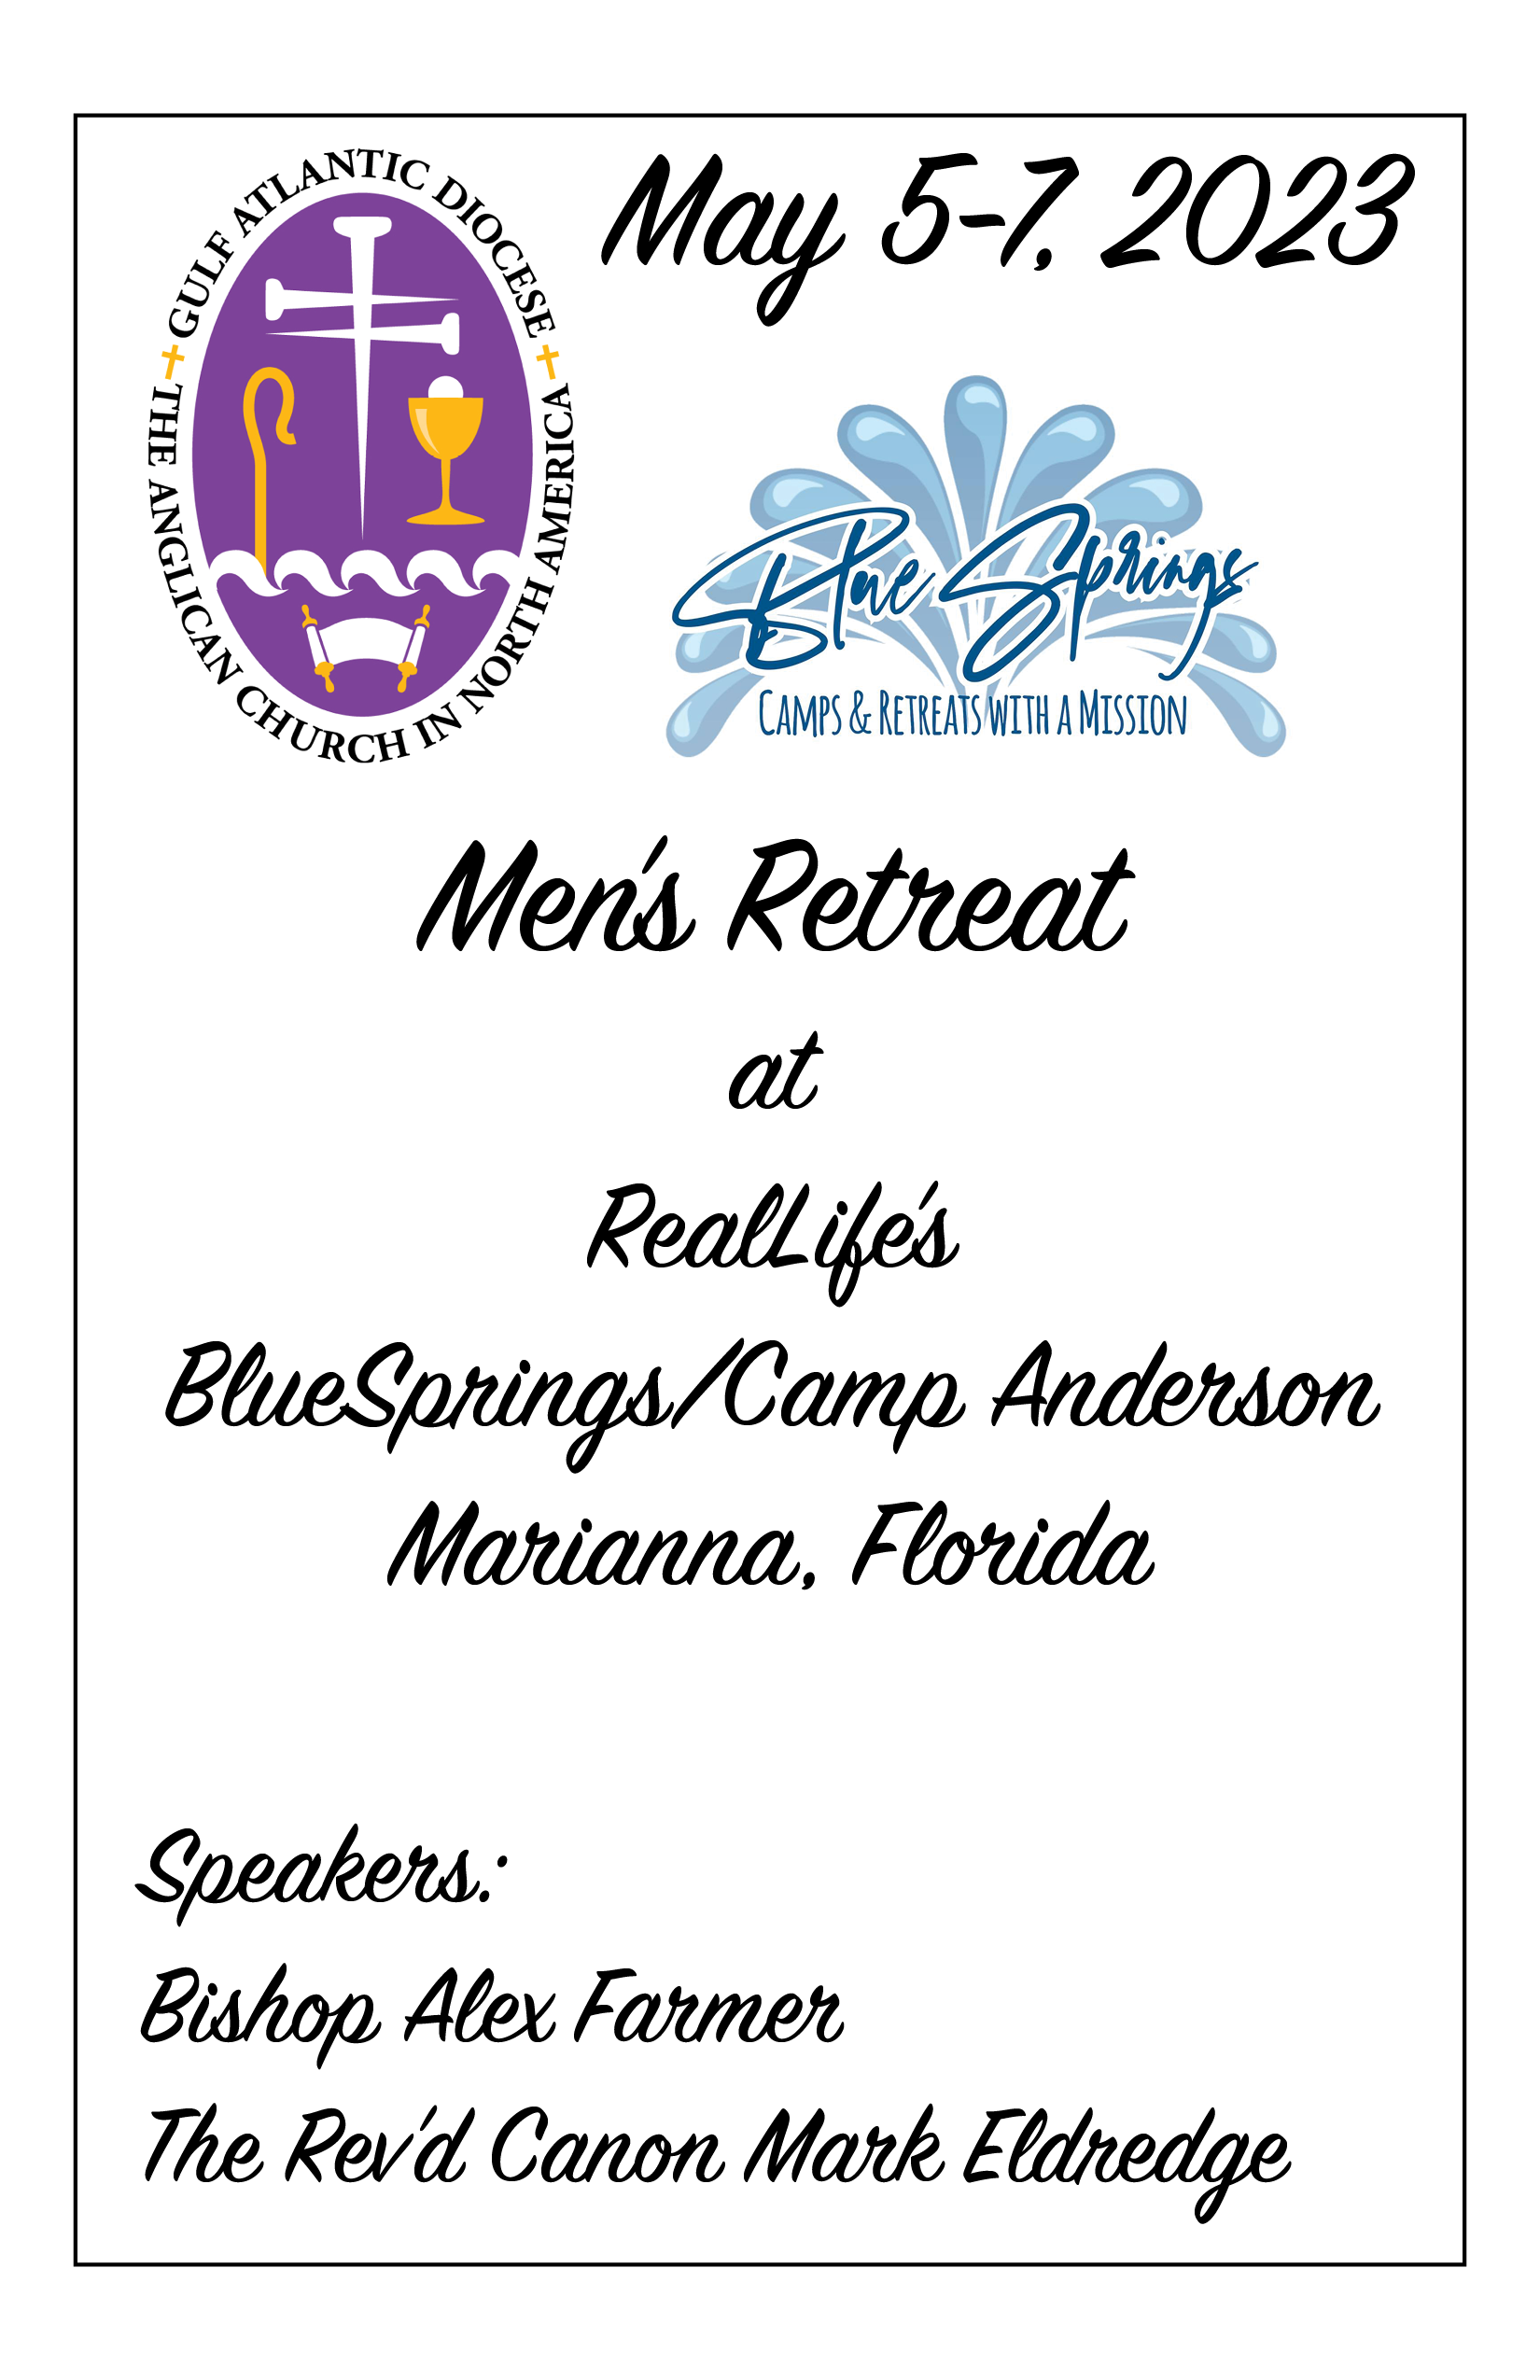 Men's Retreat at RealLife's BlueSprings/Camp Anderson in Marianna, FL Speakers: Bishop Alex Farmer, Father Mark Eldredge